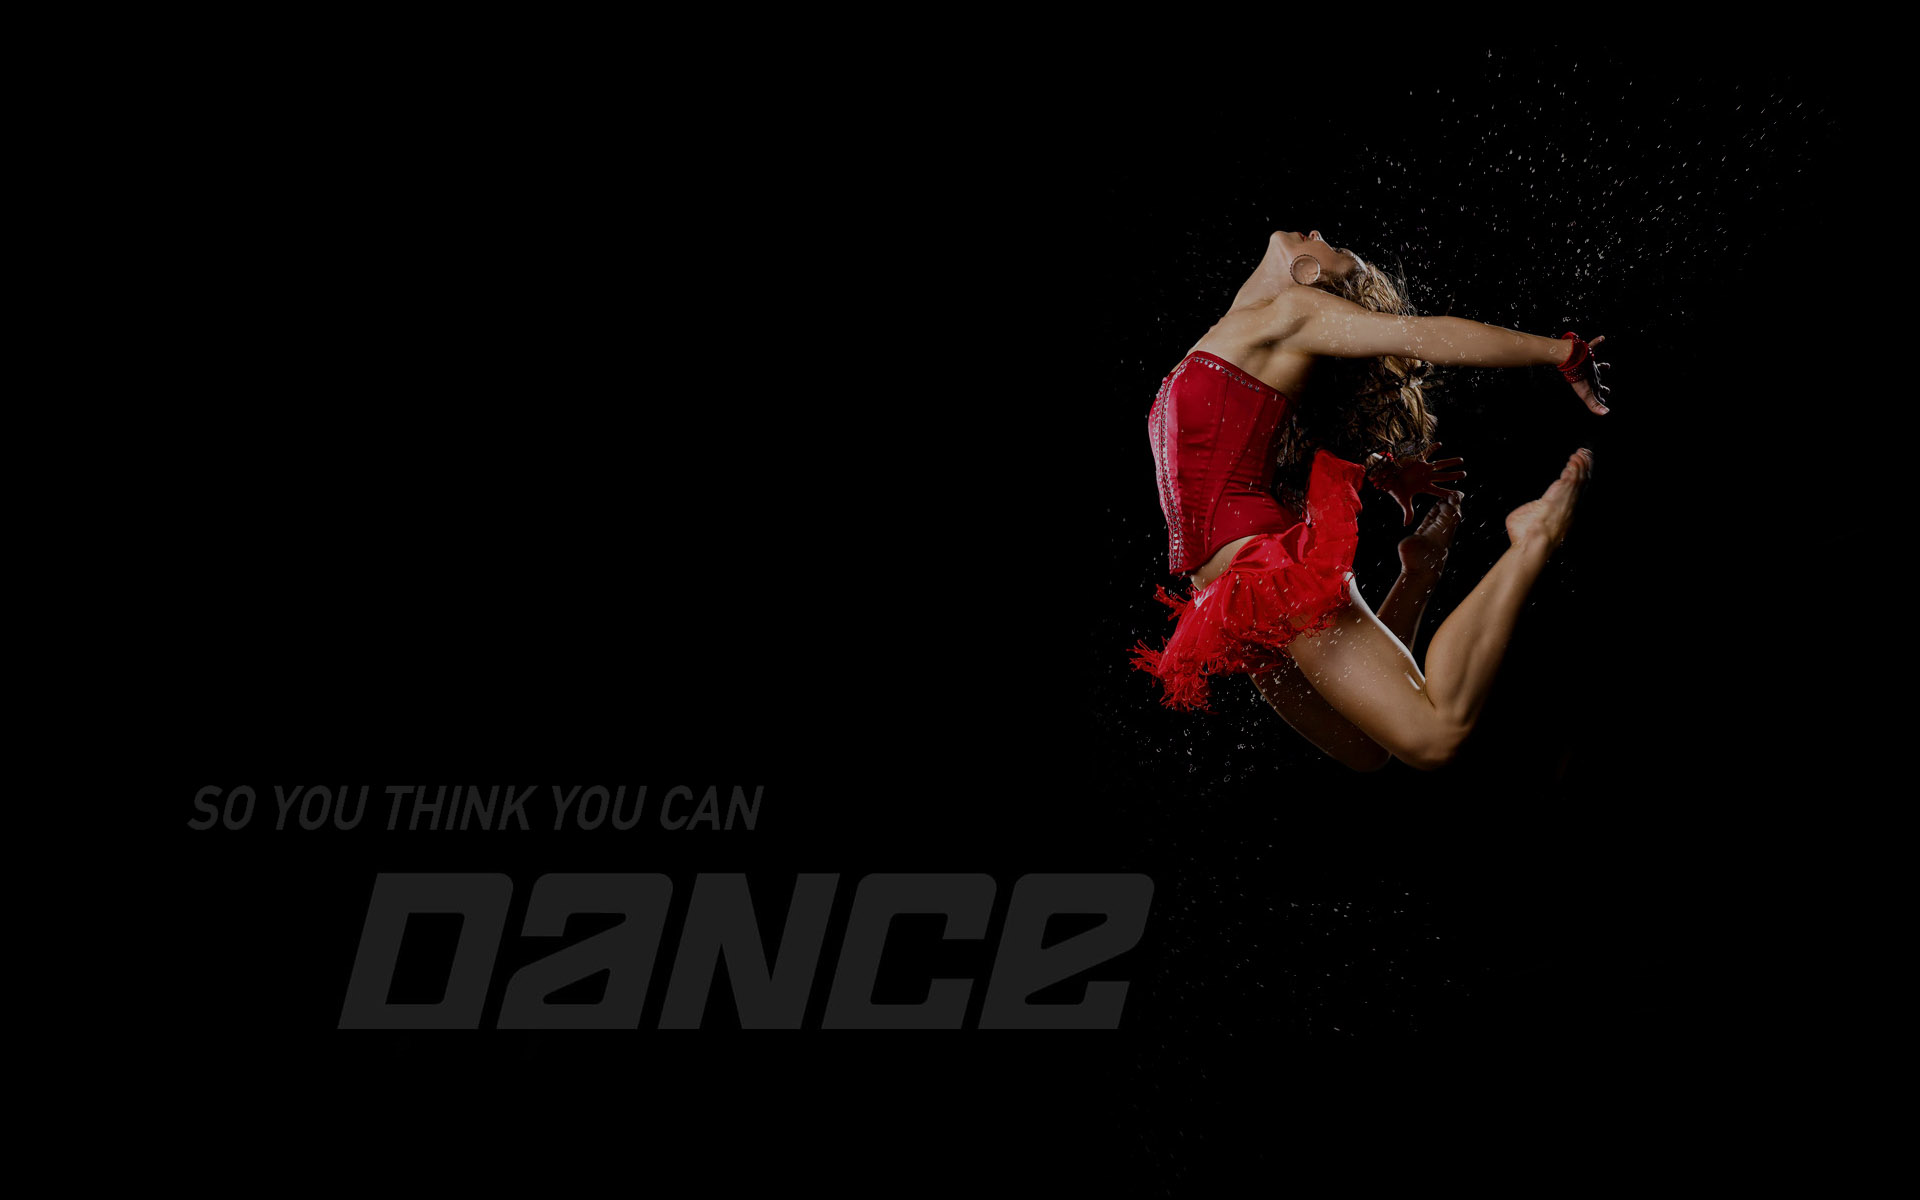 tv show, so you think you can dance, dance, dancer, dancing 32K